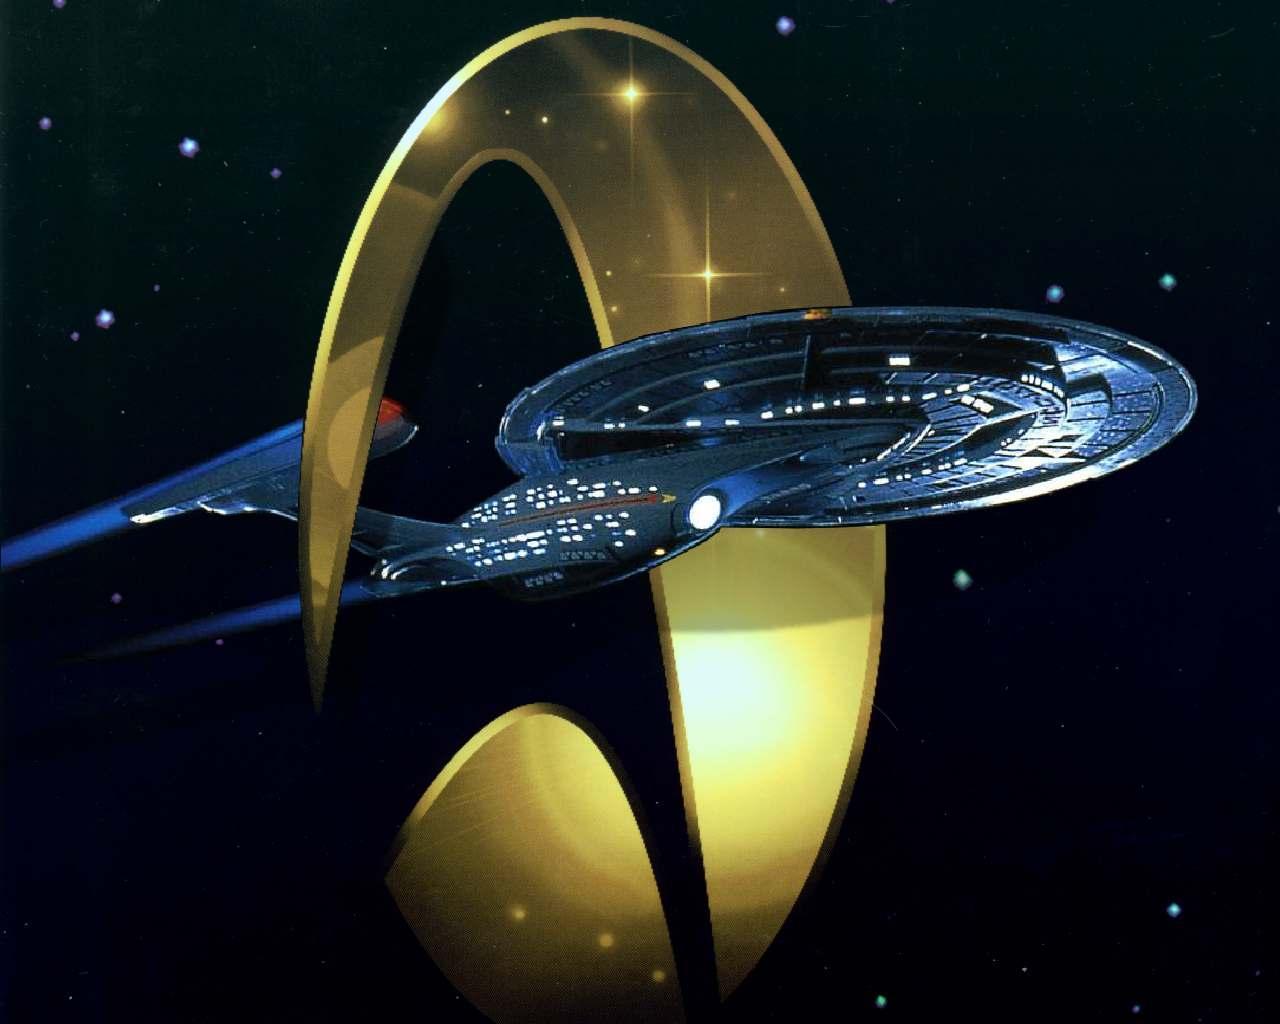 Enterprise - Star Trek The Next Generation Wallpaper 3983042